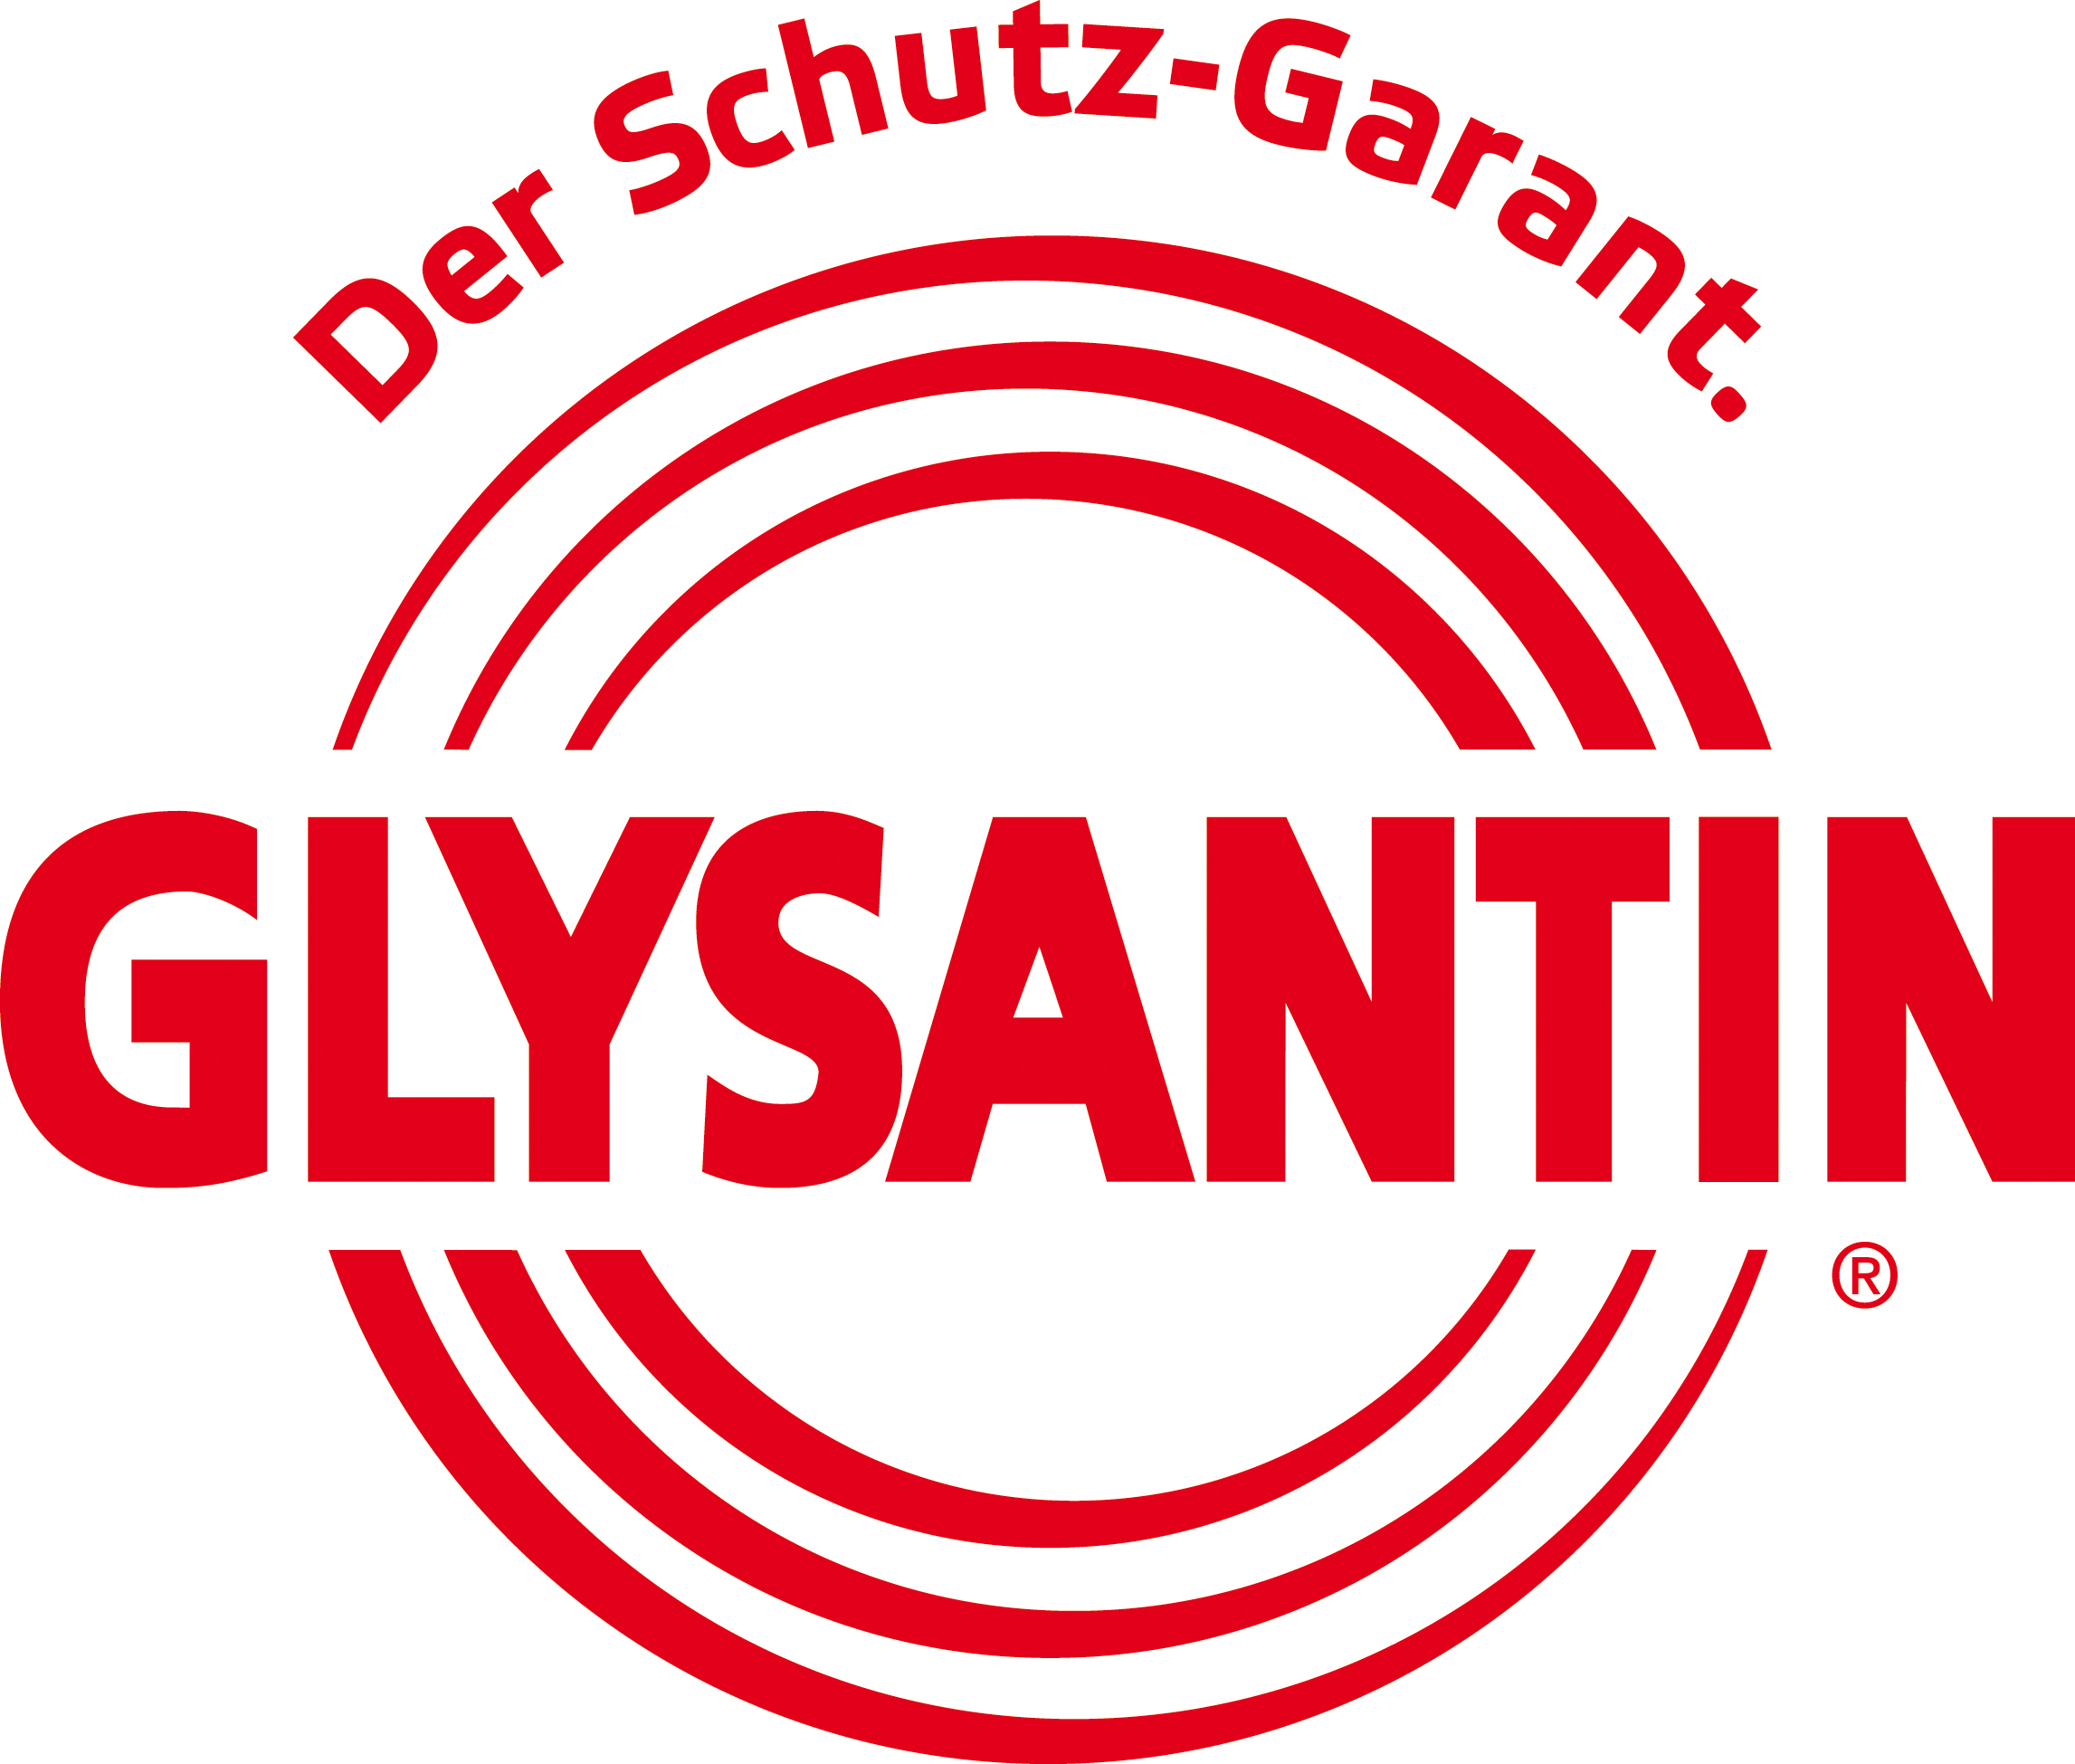 Glysantin G48 Kühlmittel / Kühlerfrostschutz 